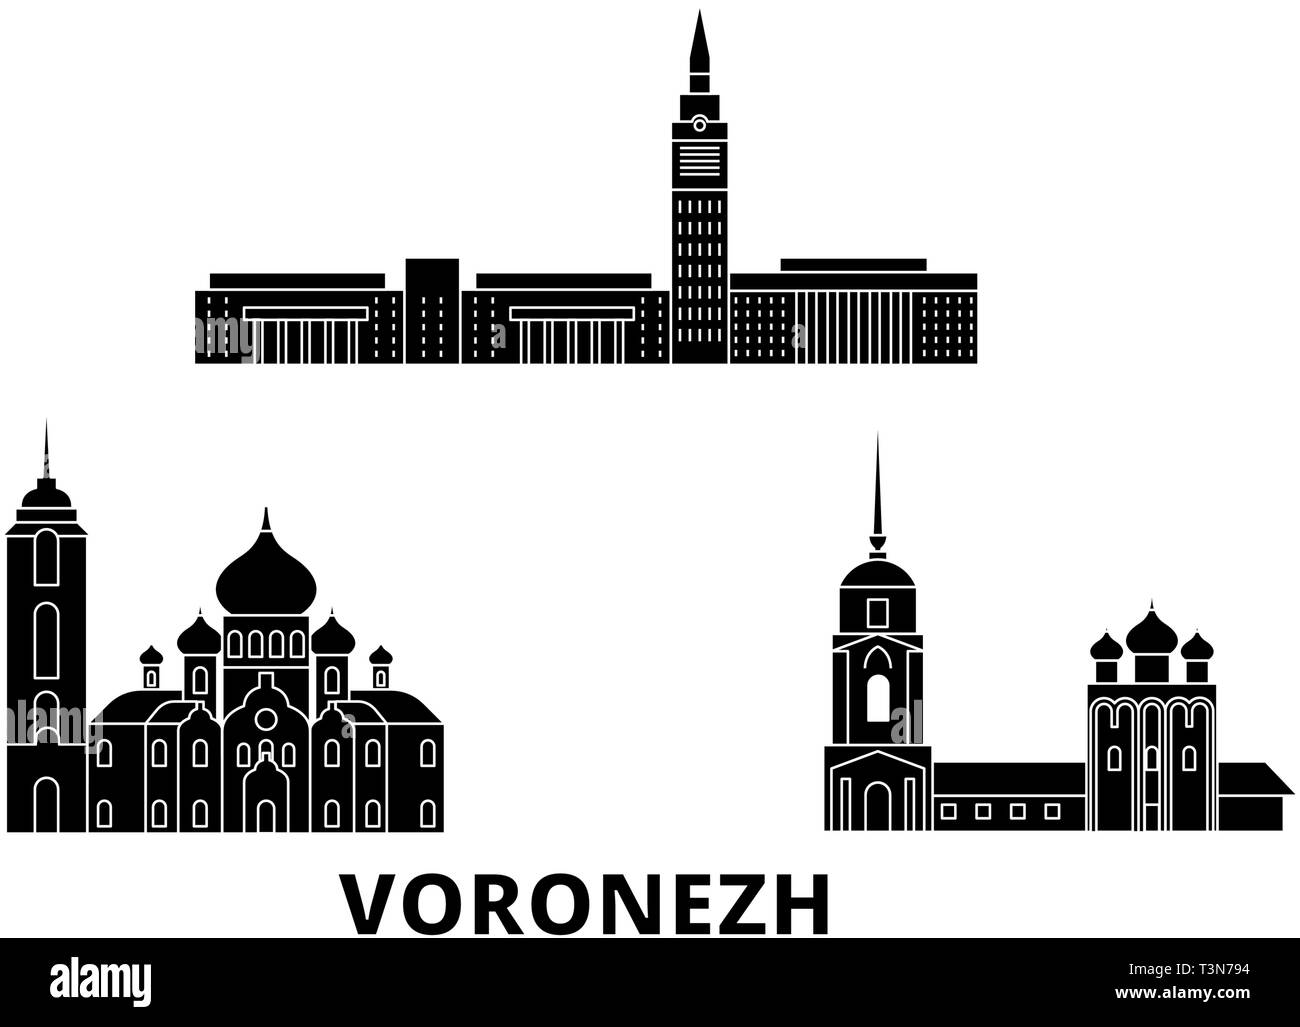 Russia, Voronezh flat travel skyline set. Russia, Voronezh black city vector illustration, symbol, travel sights, landmarks. Stock Vector